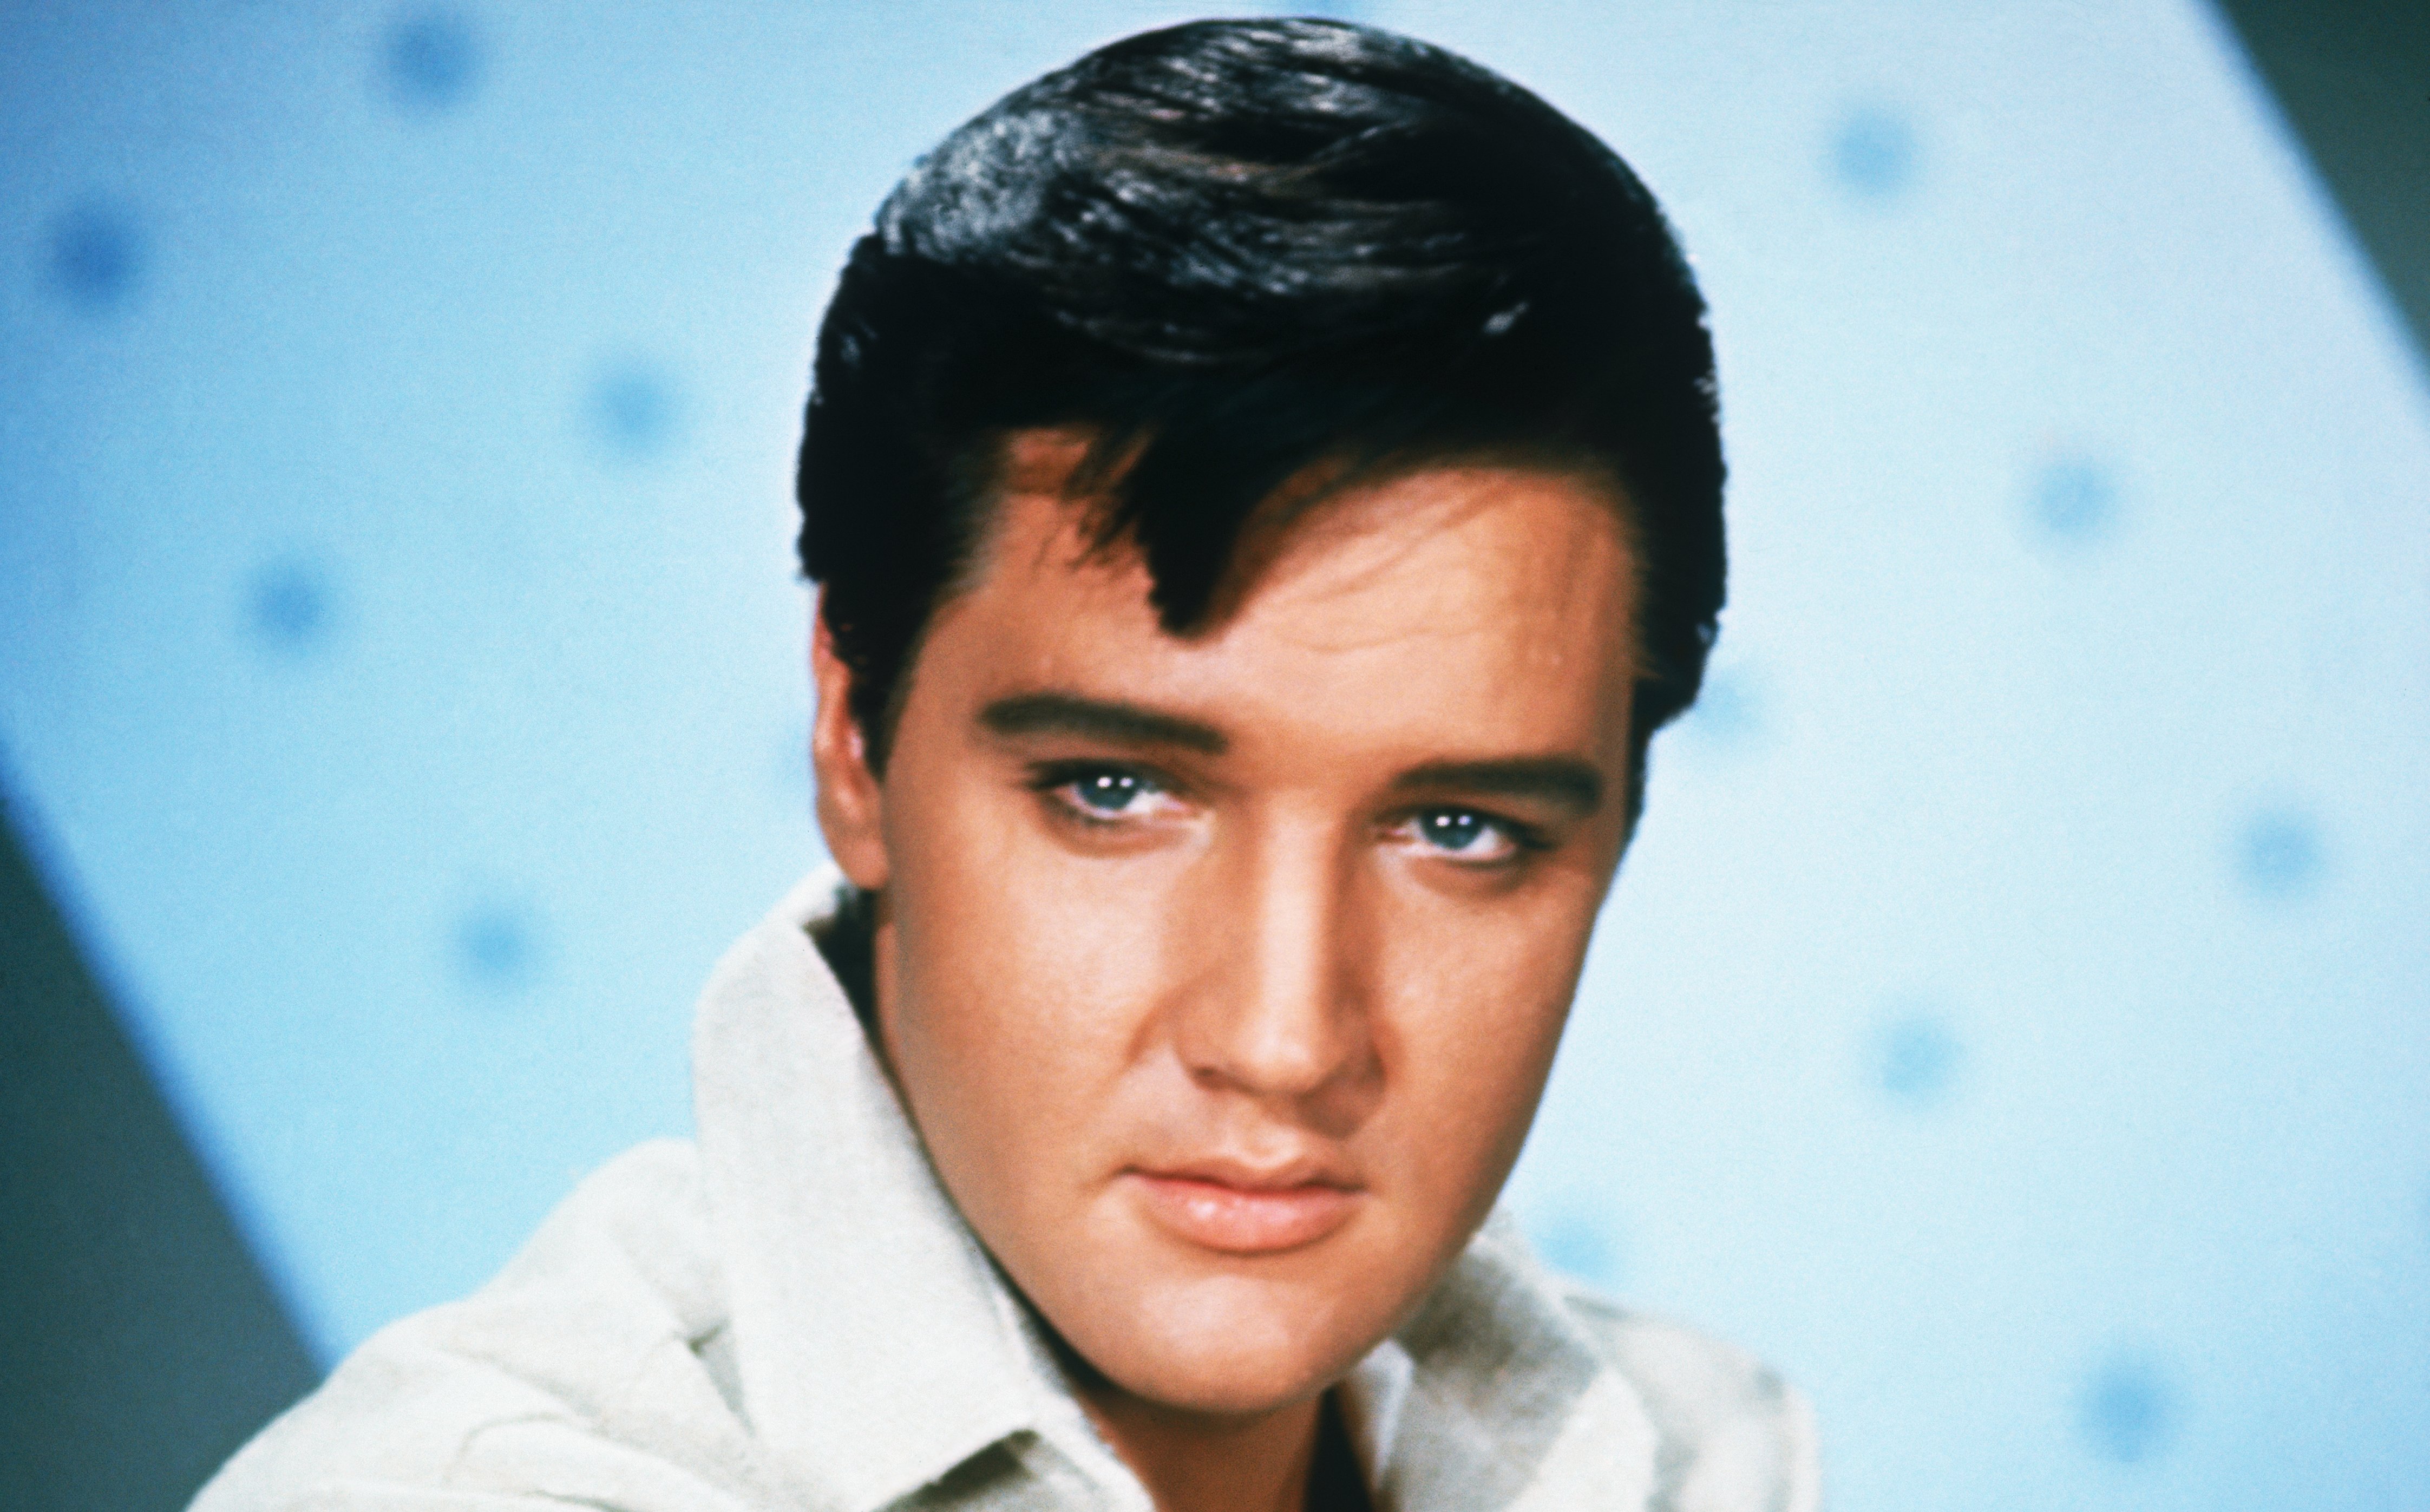 Elvis Presley circa 1960 | Source: Getty Images